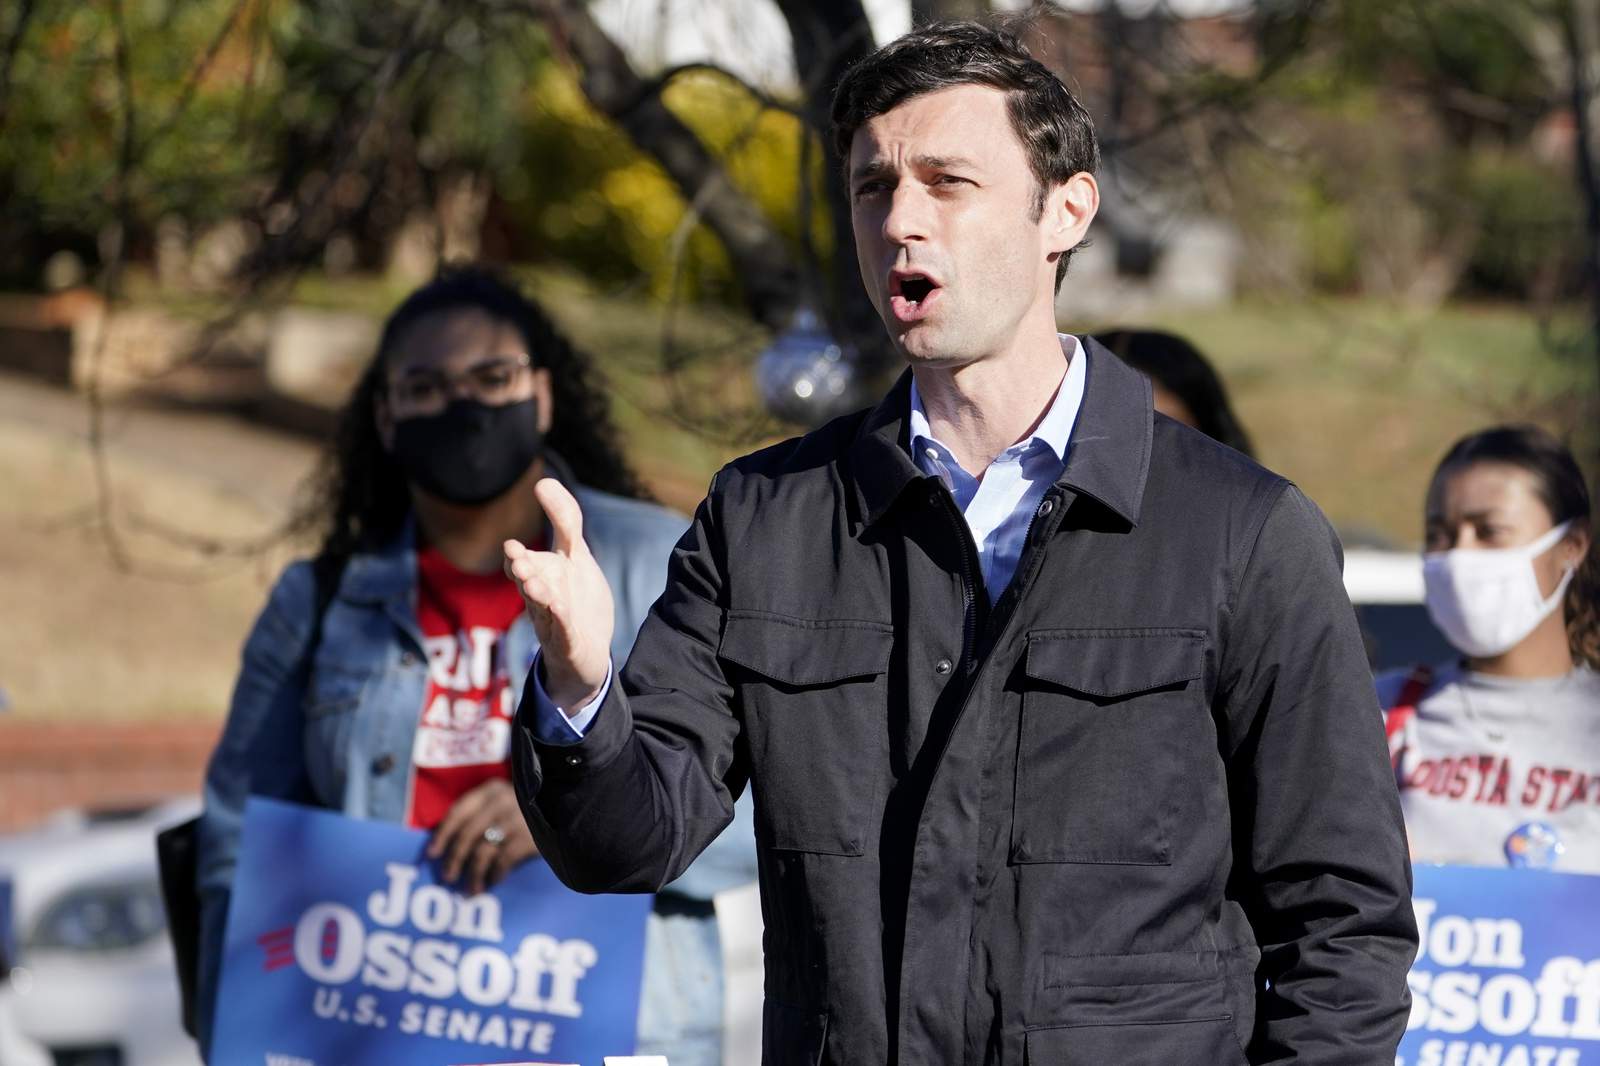 Georgia US Senate race: Ossoff again campaigning in overtime